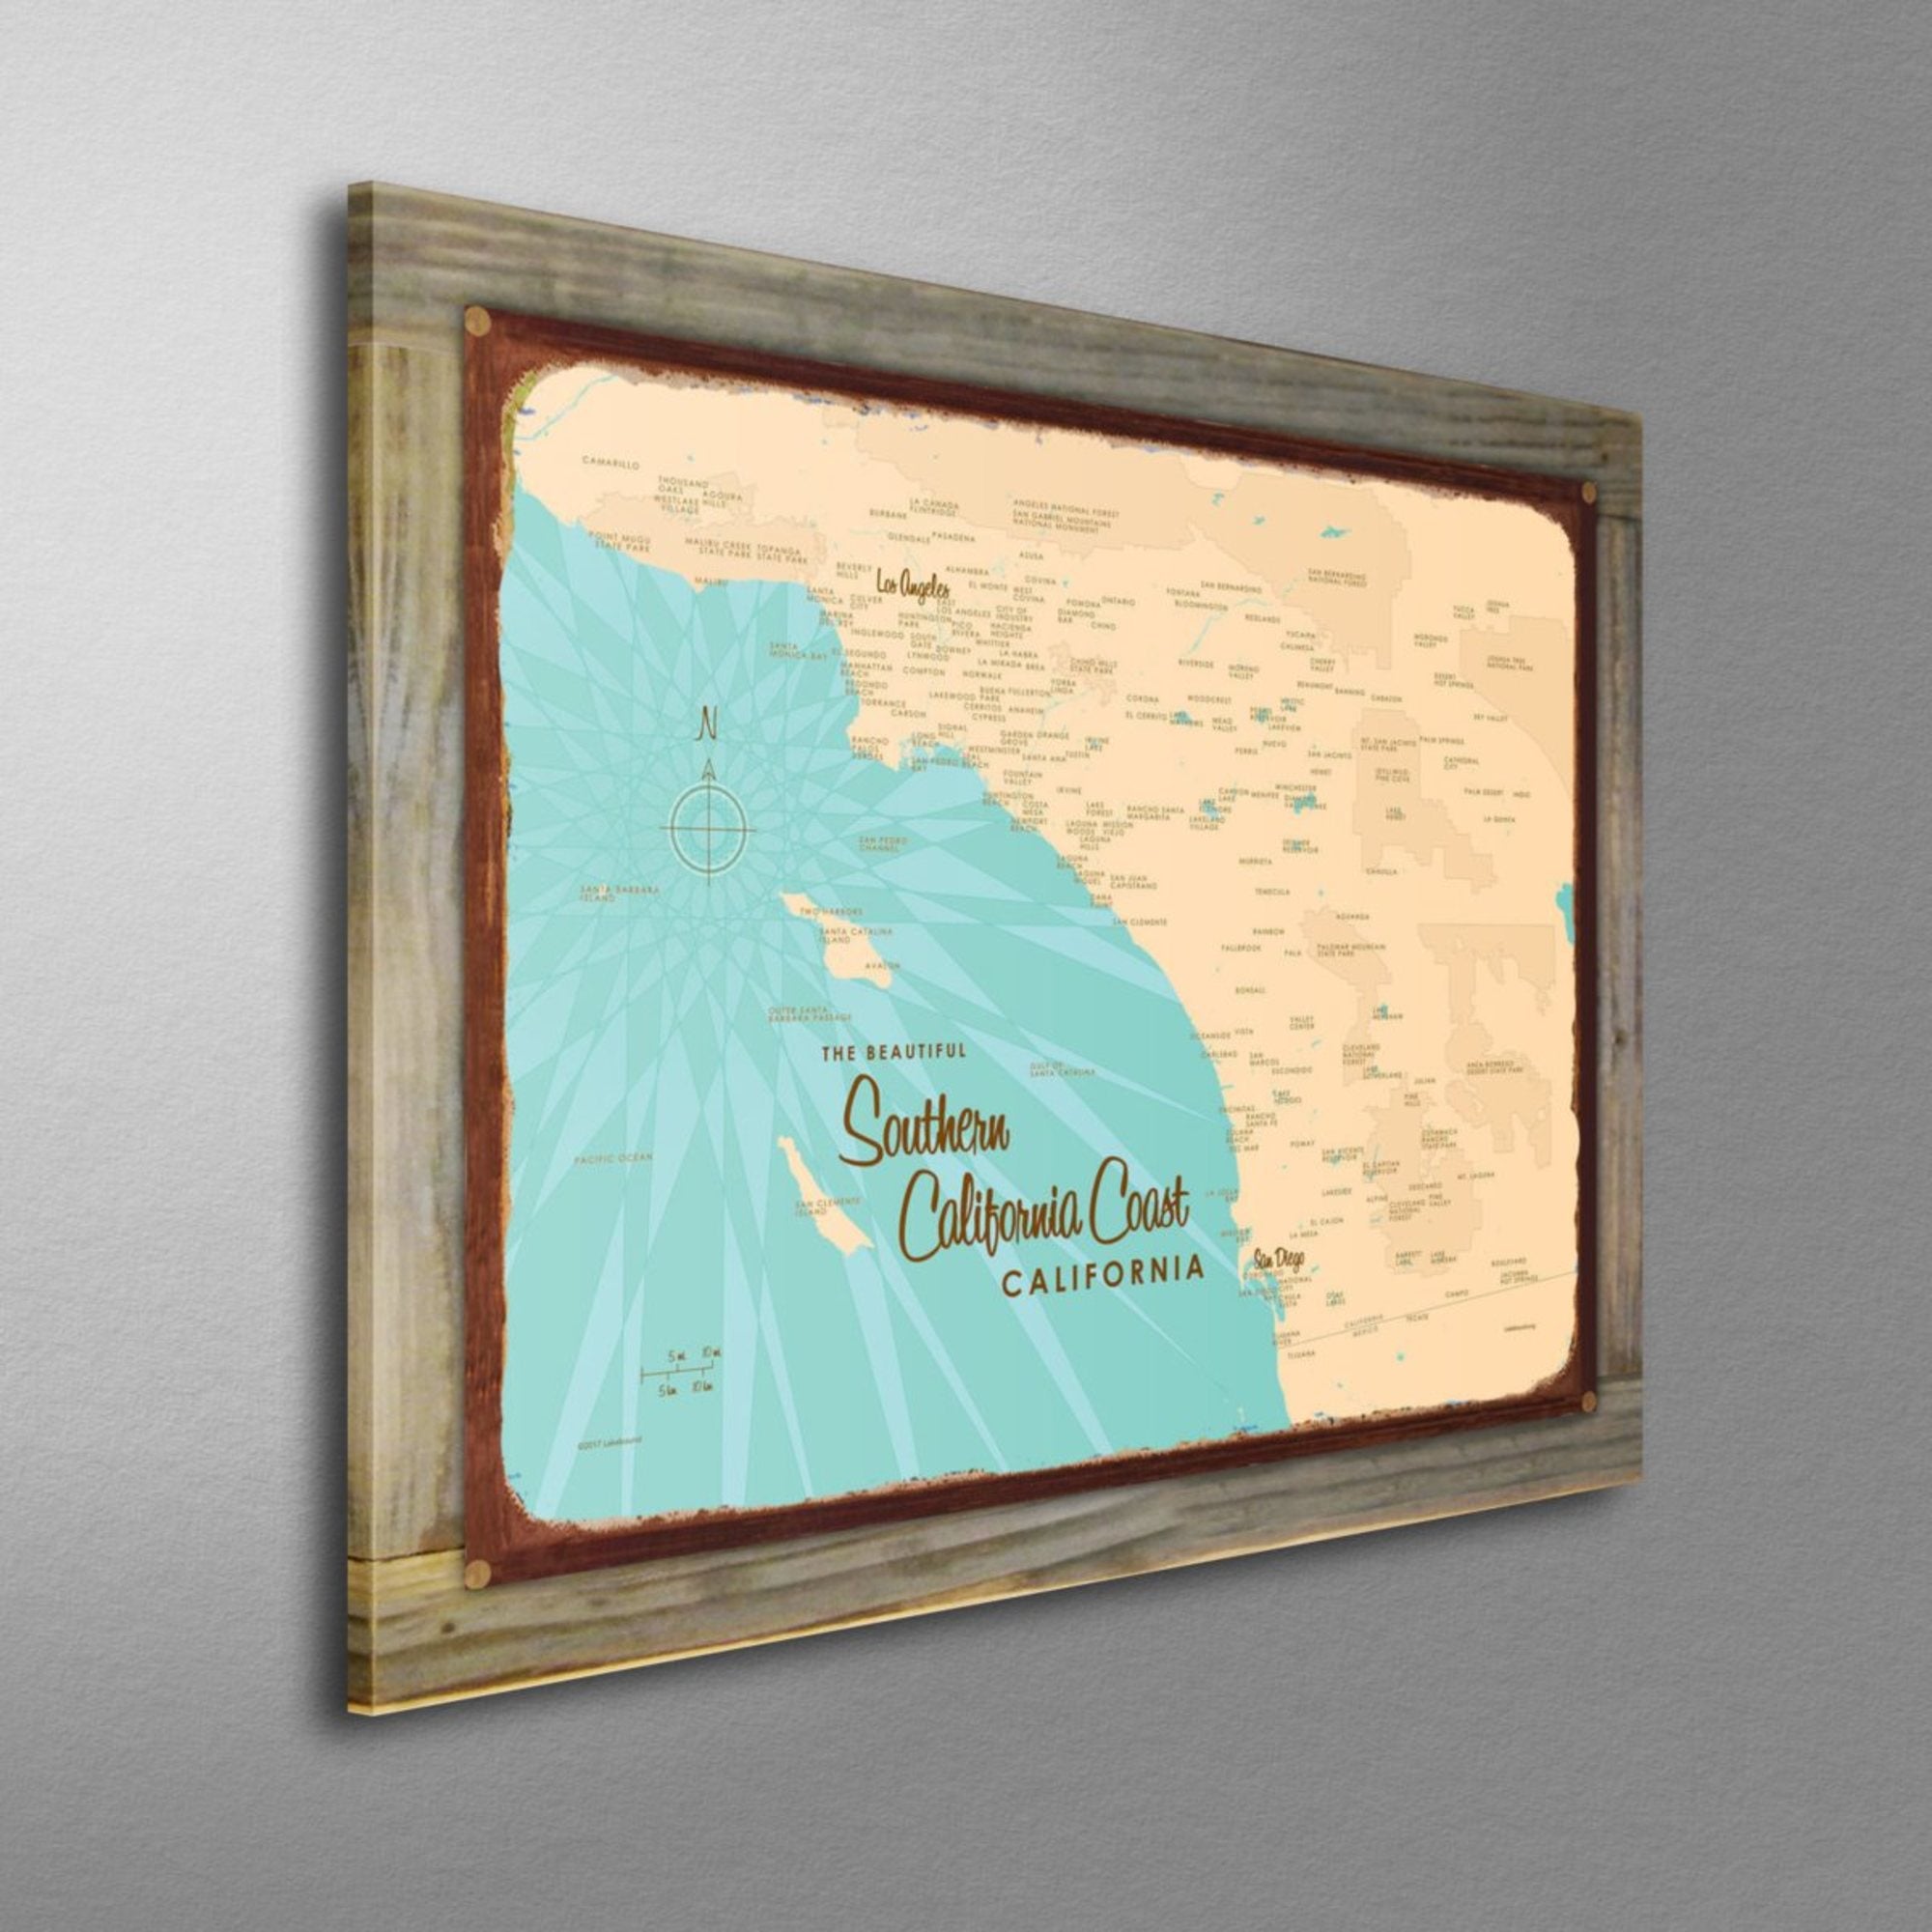 Southern California Coast, Wood-Mounted Rustic Metal Sign Map Art